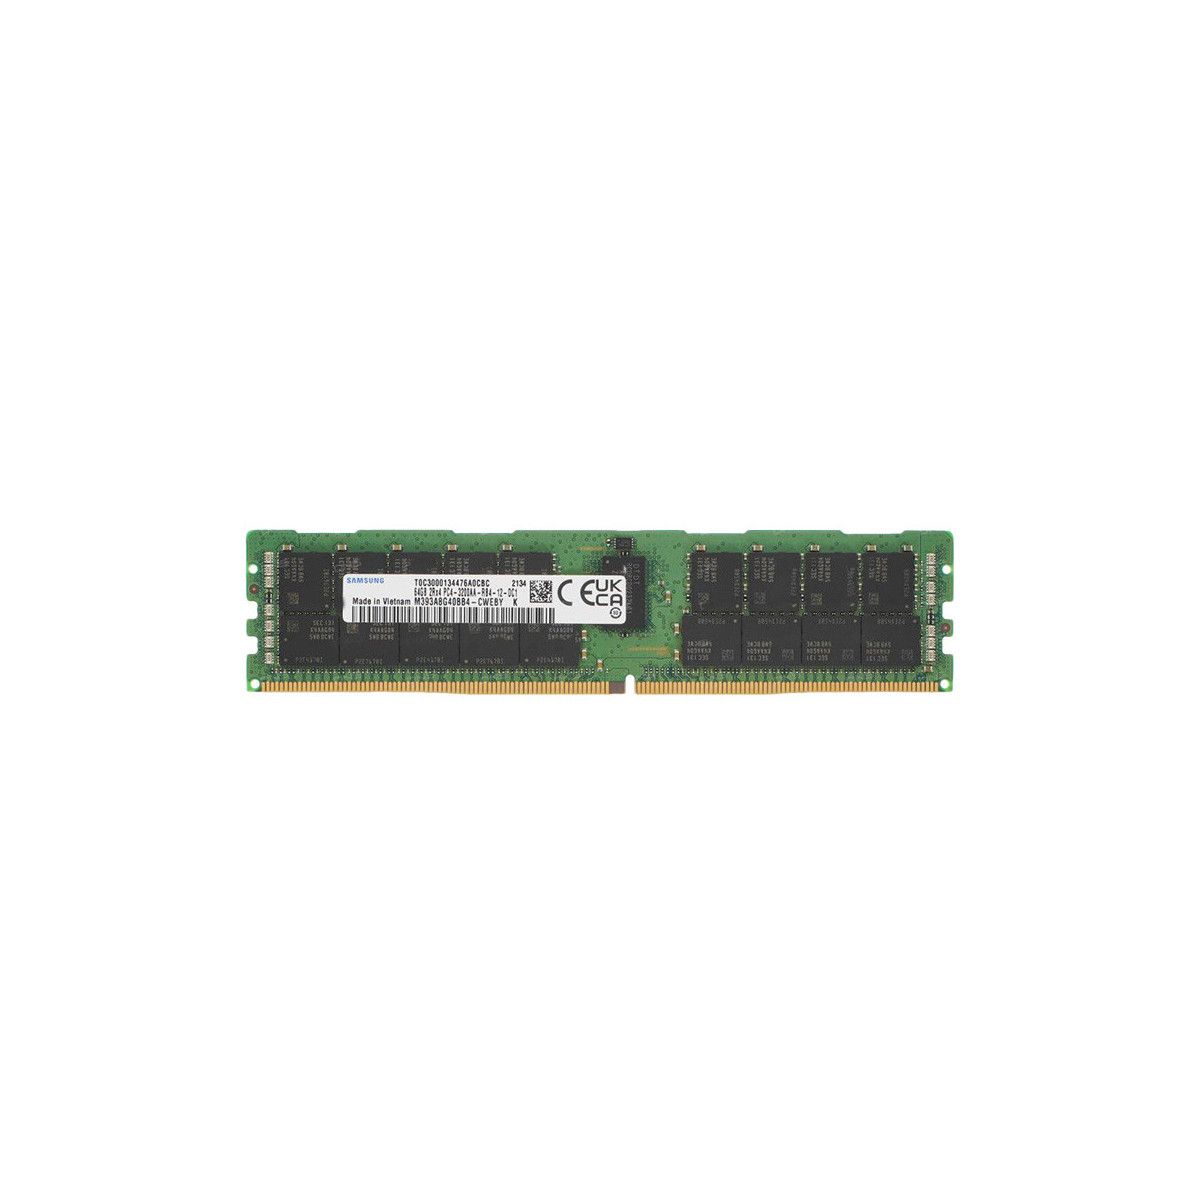 P07650-H21-MS - Memstar 1x 64GB DDR4-3200 RDIMM PC4-25600R - Mem-star Kompatibel OEM Speichermedien 1 - Memstar 